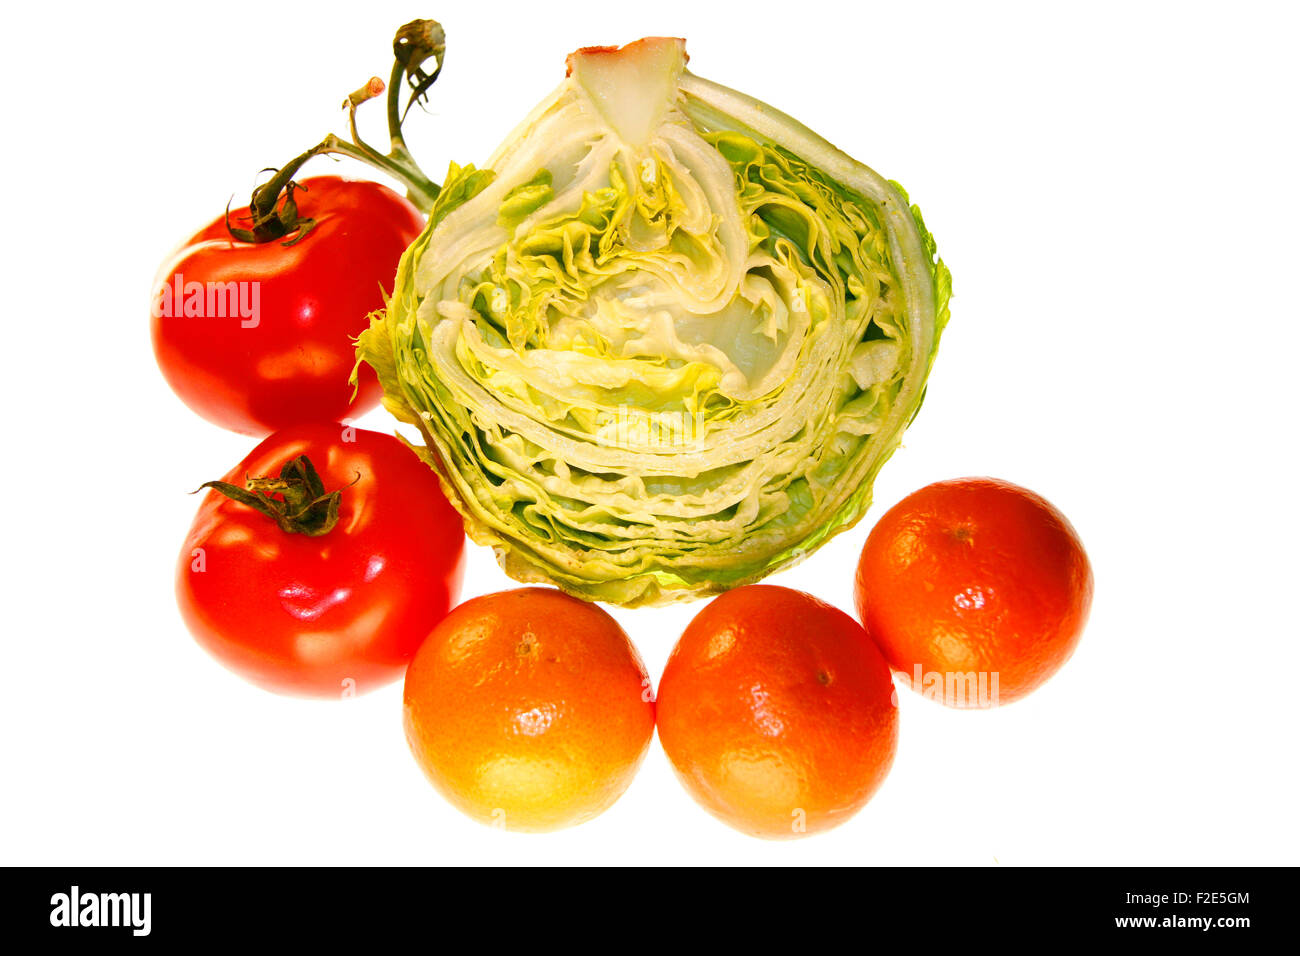 Kopfsalat / gruener Salat, Tomaten, Mandarinen/ Clementinen - Symbolbild Nahrungsmittel . Stock Photo